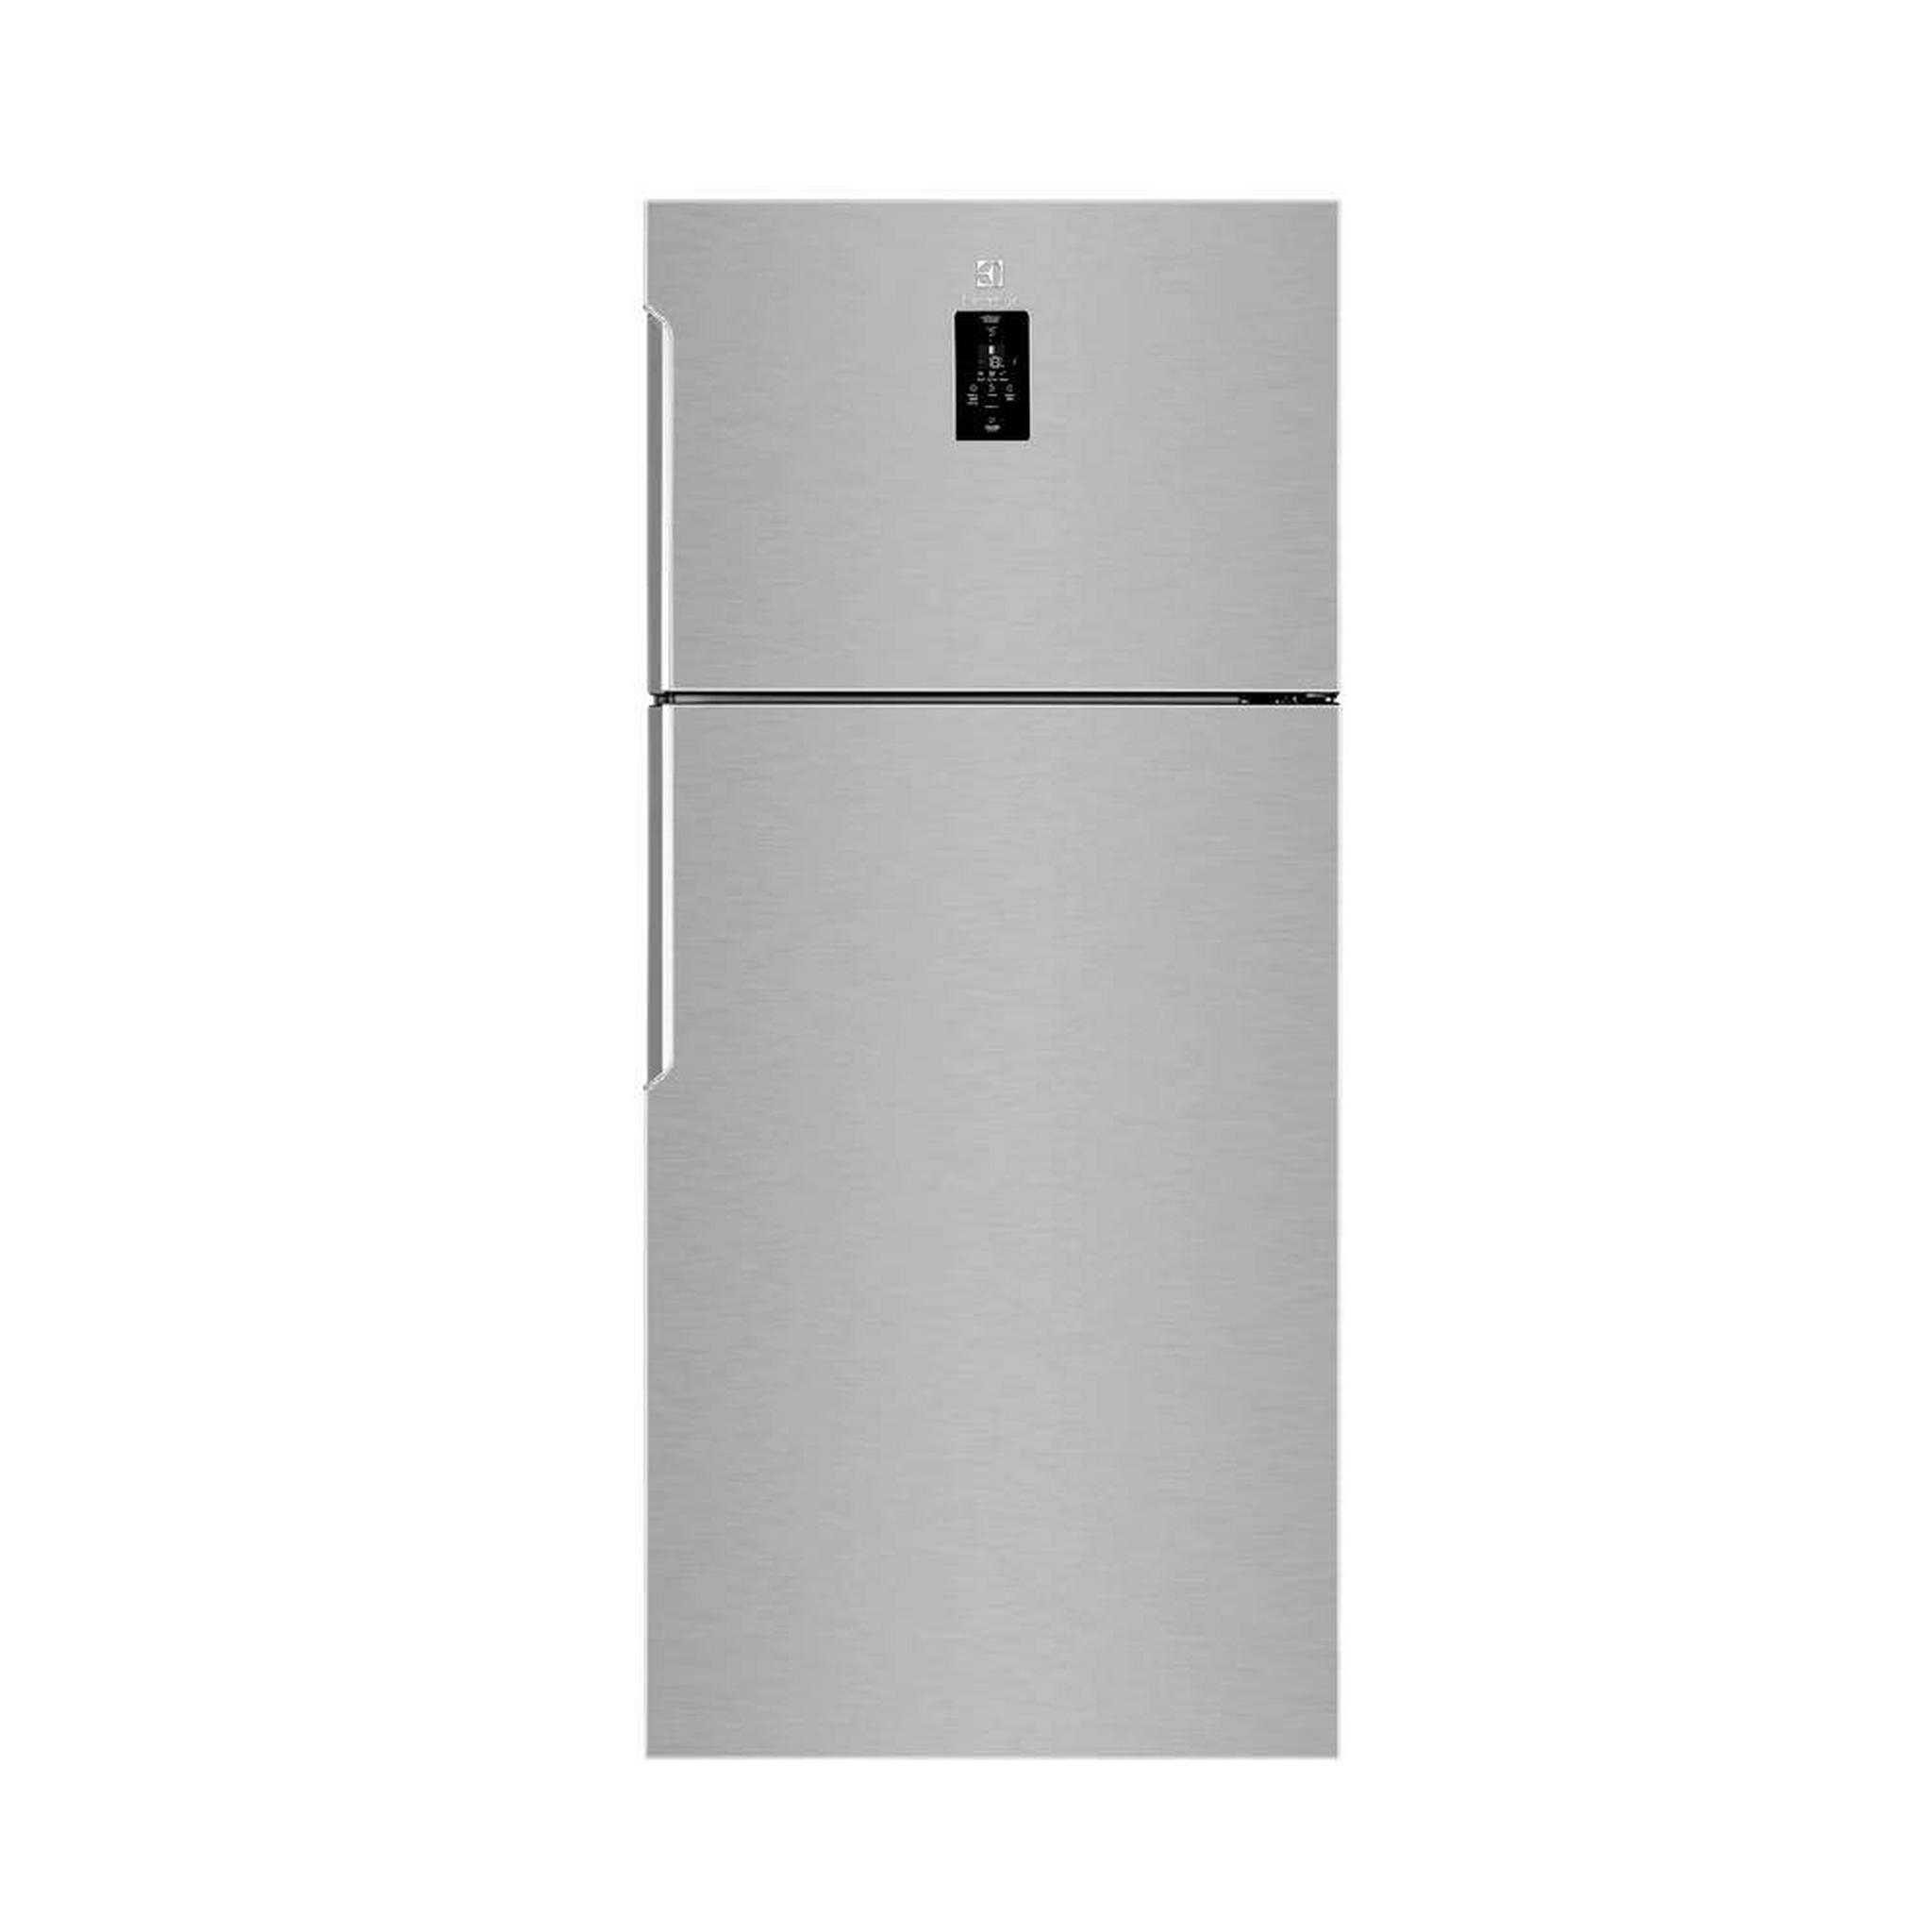 ELECTROLUX Refrigerator Top Freezer, 20 CFT, Inox + Cooker Gas, Stainless Steel  + 10 KG Front Load Washer, Silver Bundle, EMT86+EW8F+EKG9000